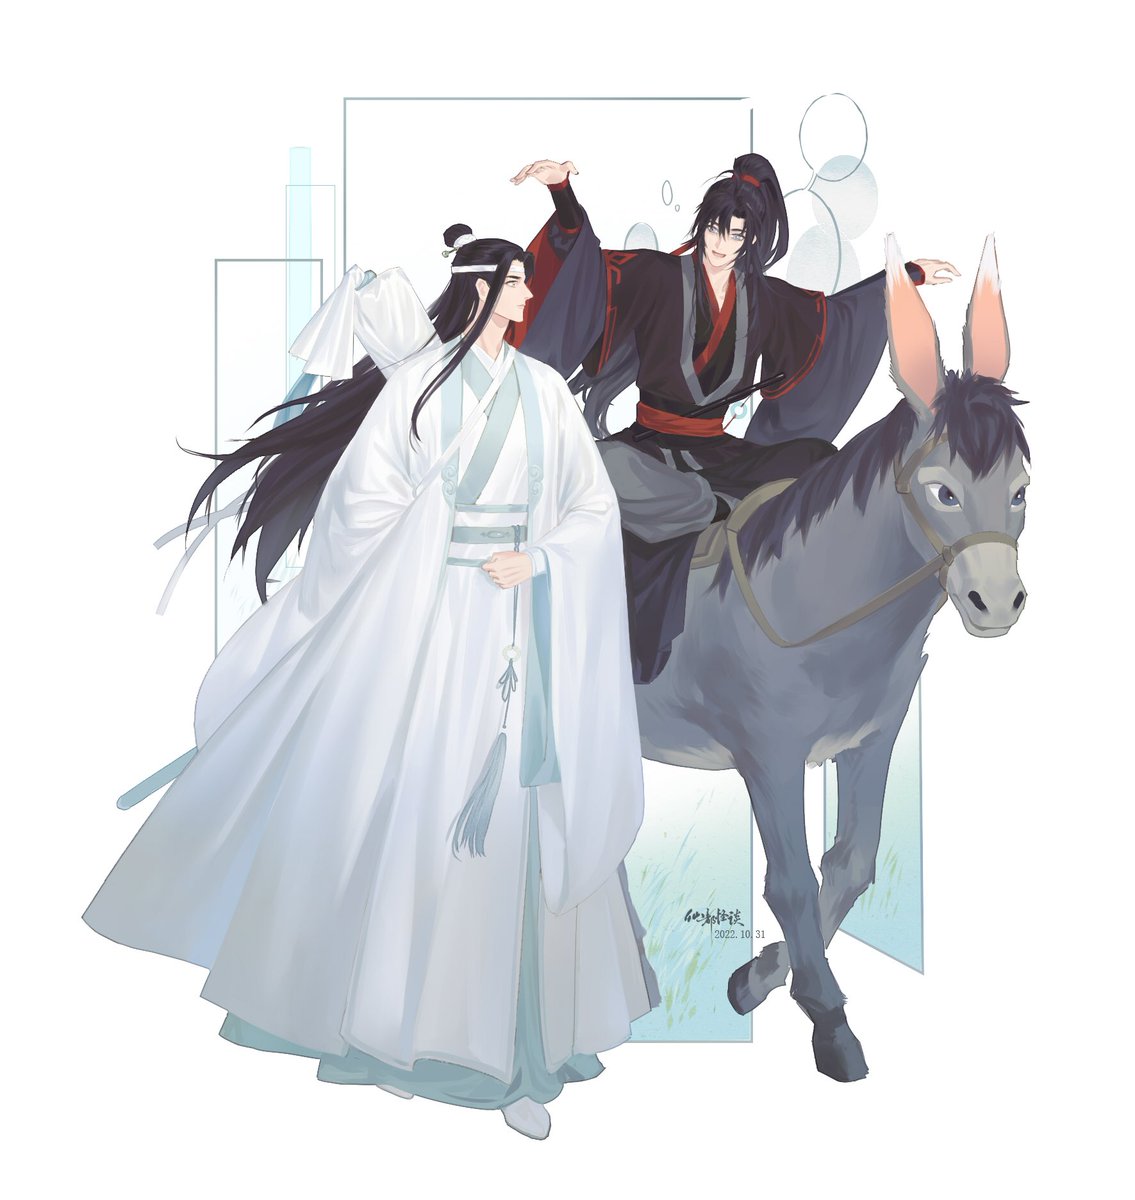 white headband chinese clothes 2boys long hair multiple boys hanfu robe  illustration images